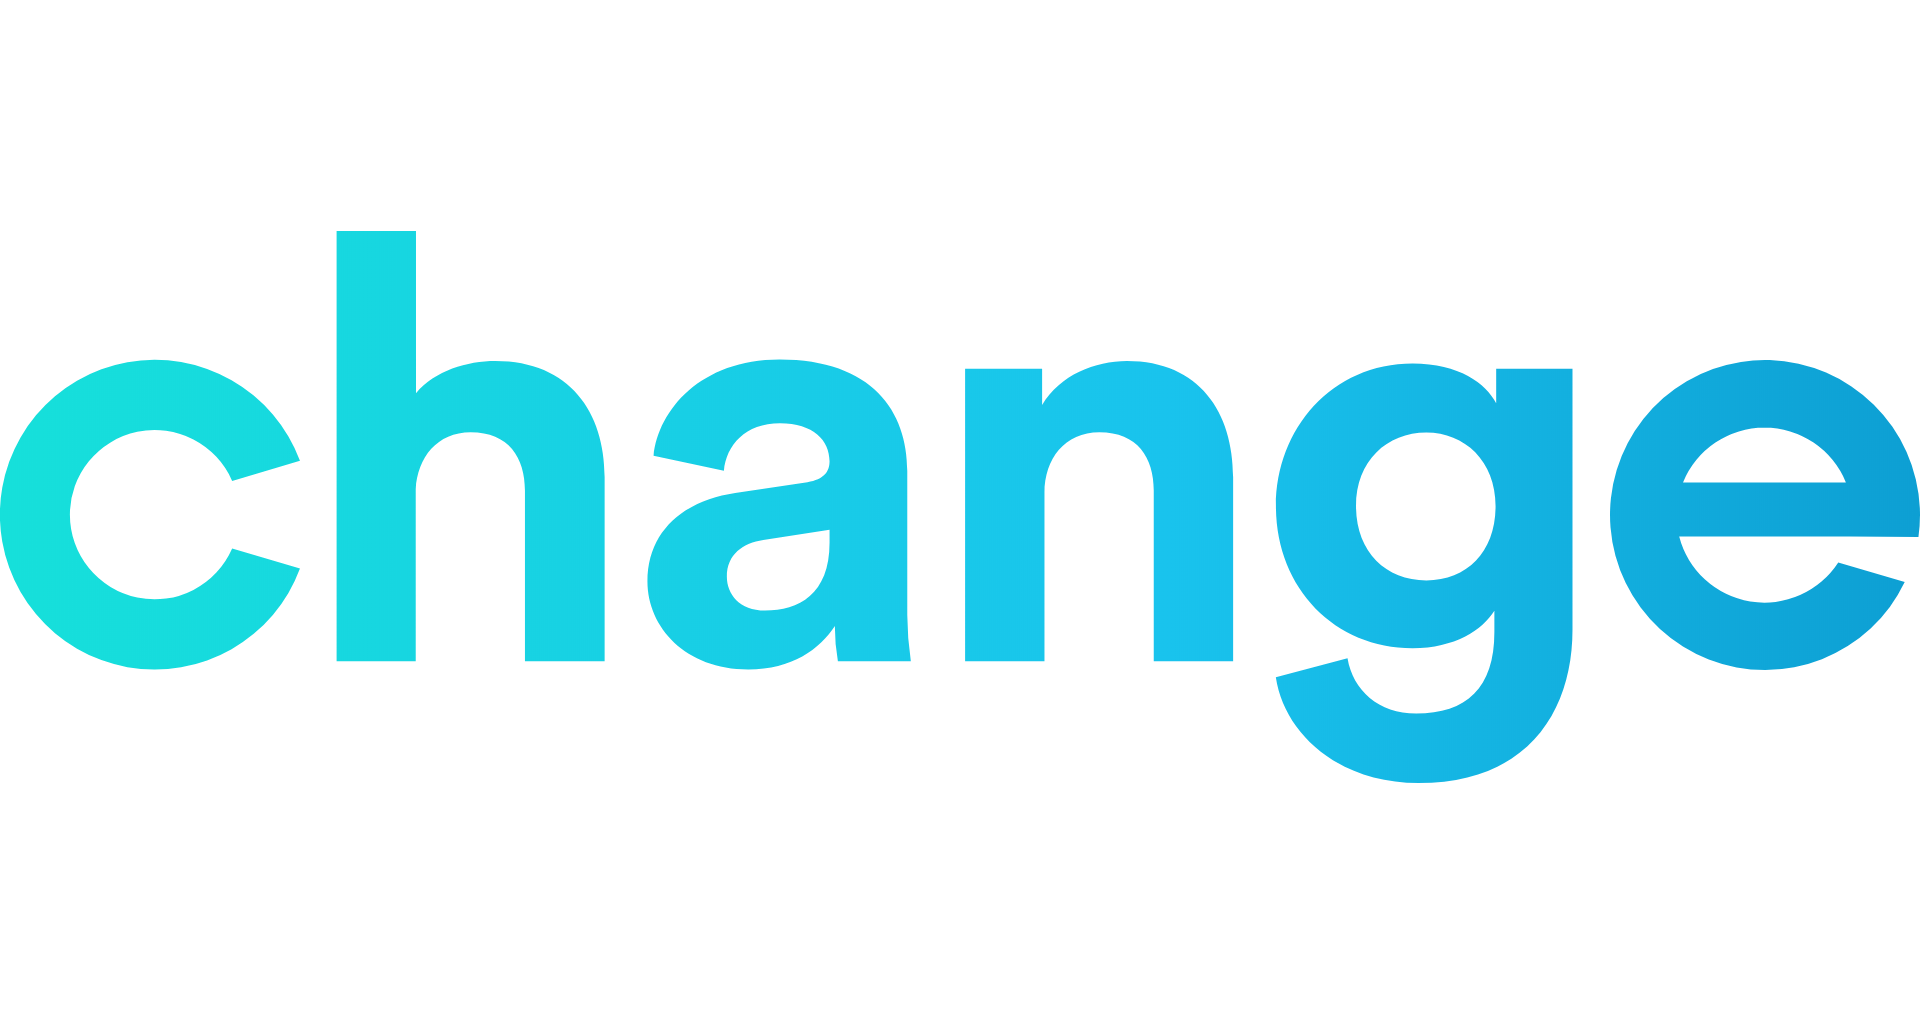 Microsoft Logo Change